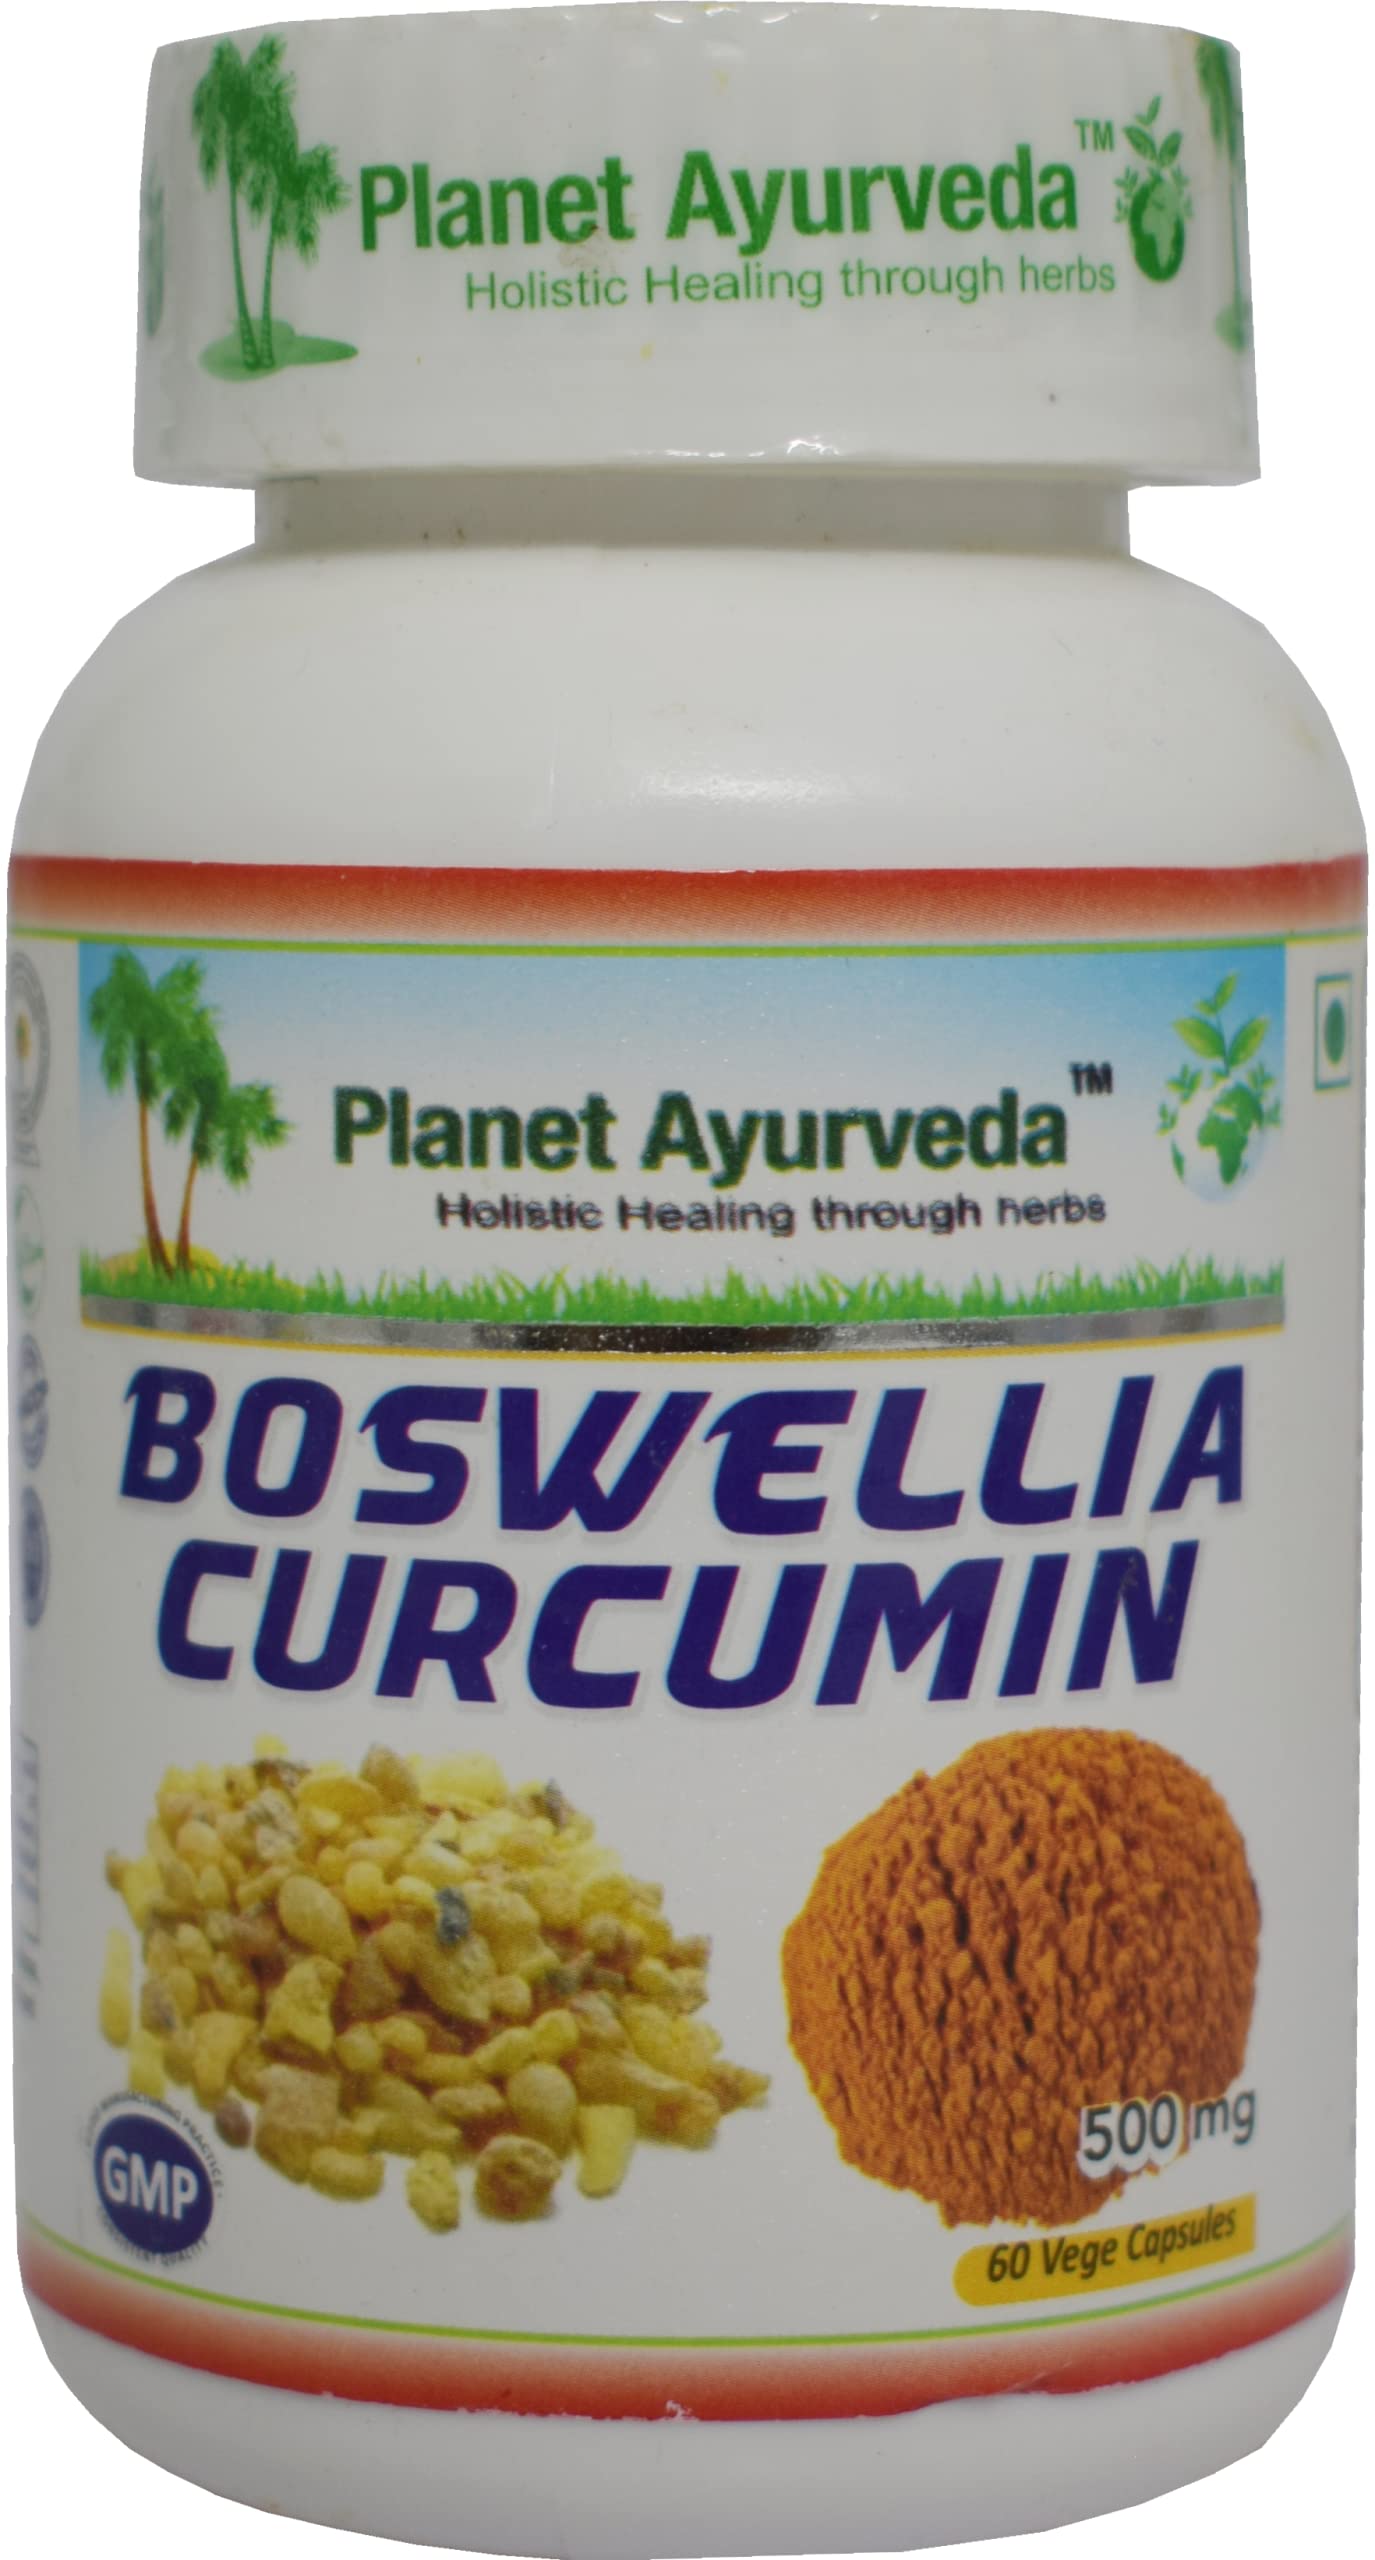 Planet Ayurveda Boswellia Curcumin - 60 Capsules, Pack of 1